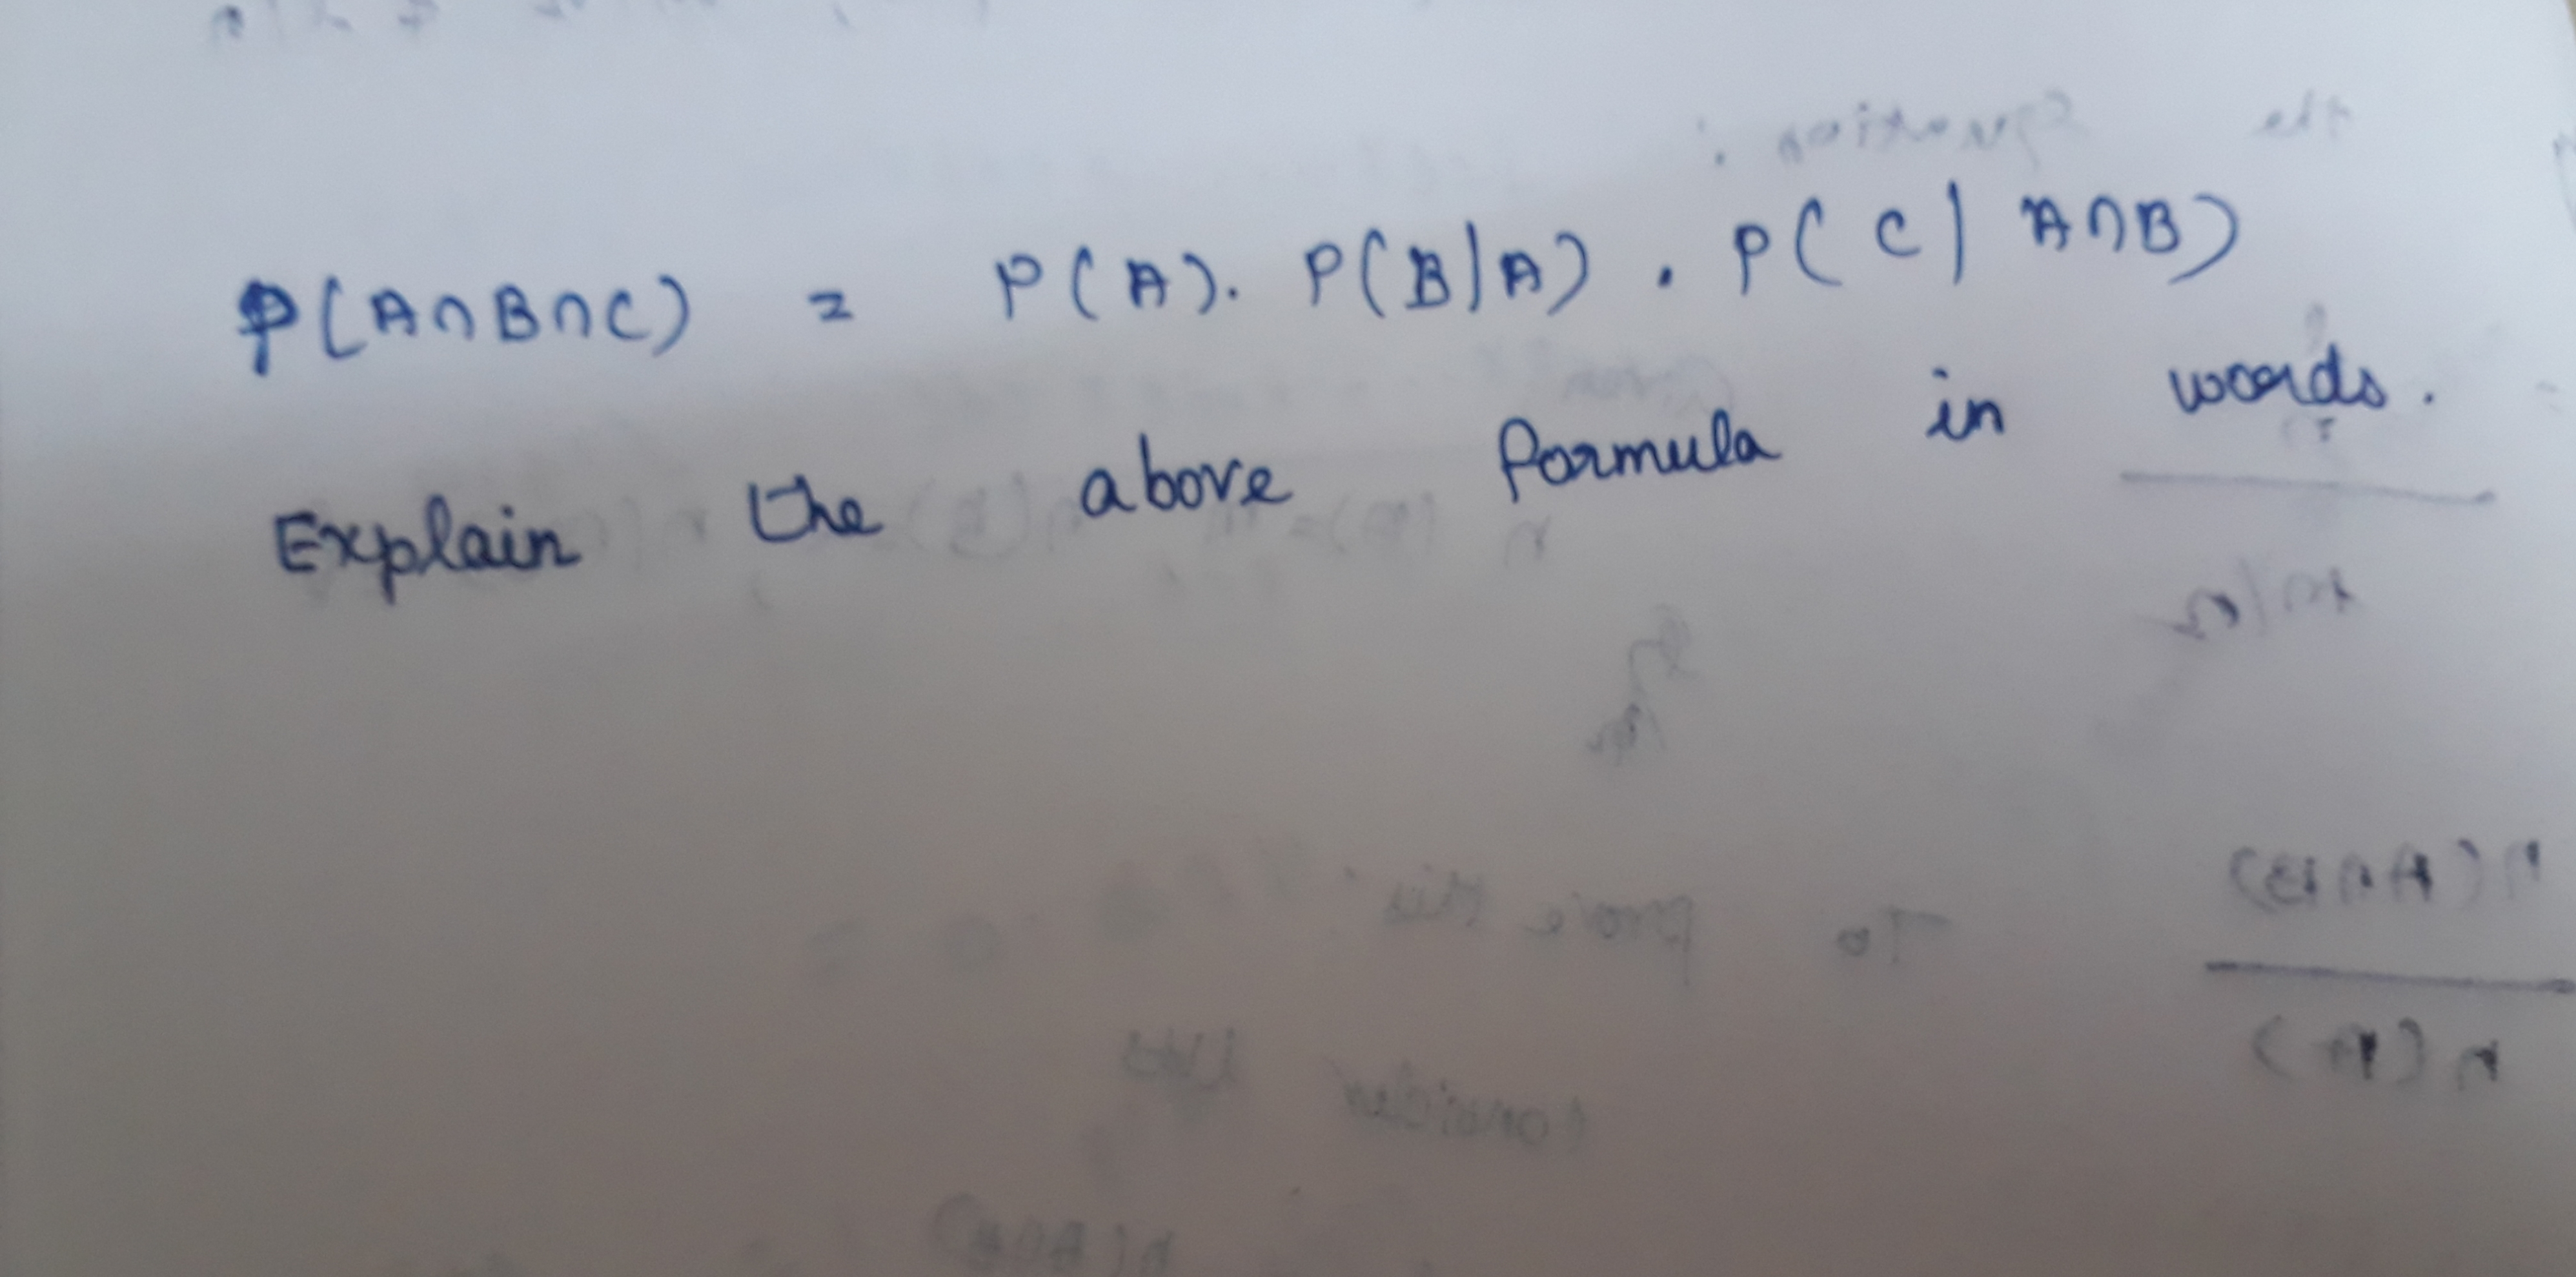 PLANBNC)
p(A). P(B)A).plc) AB)
a bove
Pormula
in
words
.
1.
